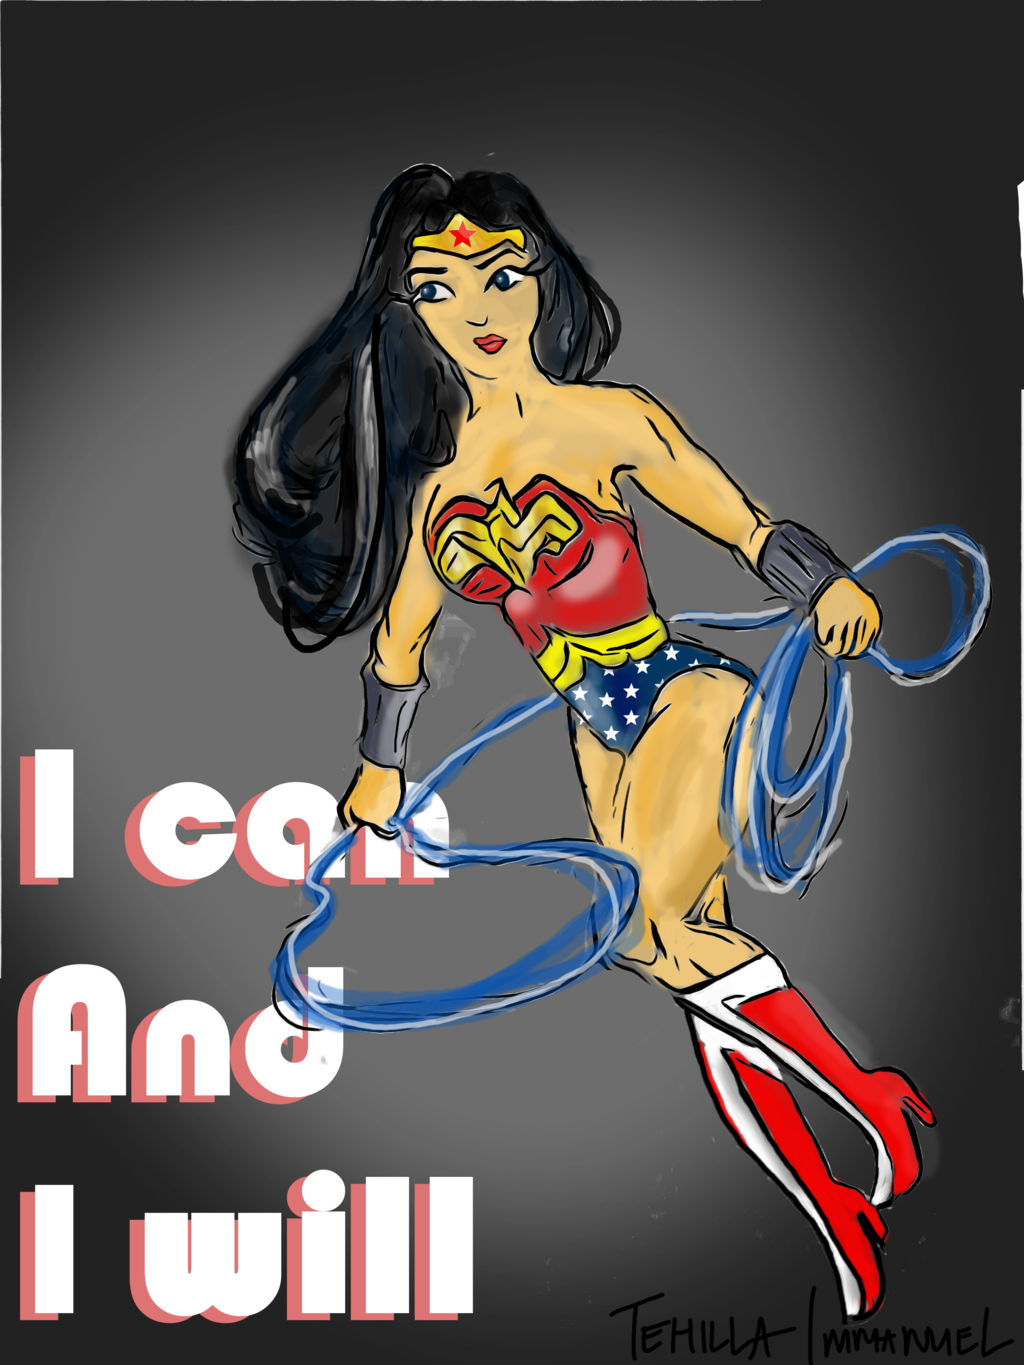 Most recent image: Wonder Woman